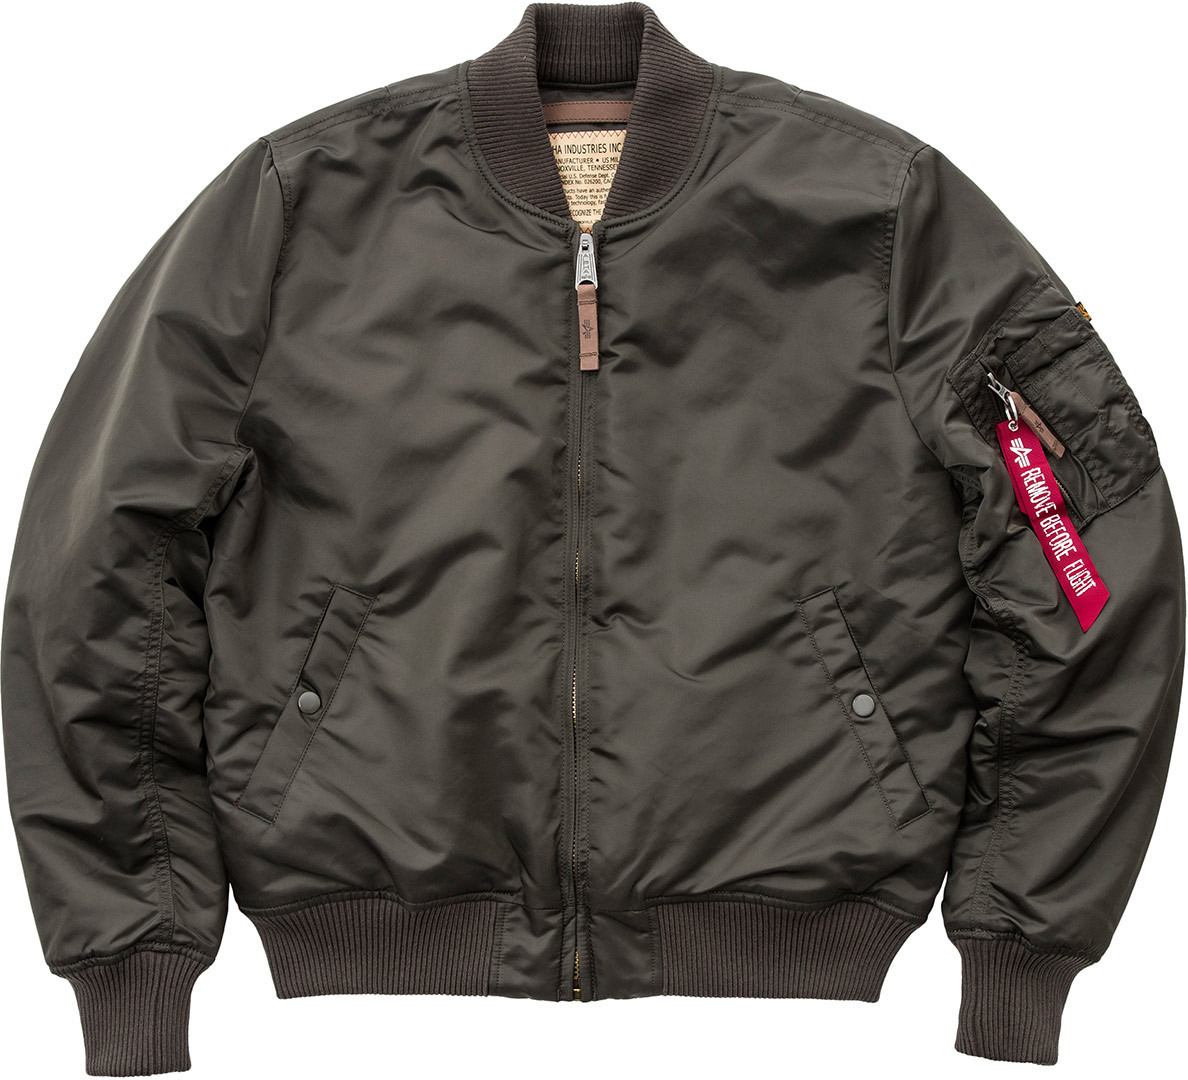 Куртка Alpha Industries MA-1 VF 59, коричневая куртка ma 1 vf 59 alpha industries оливковое